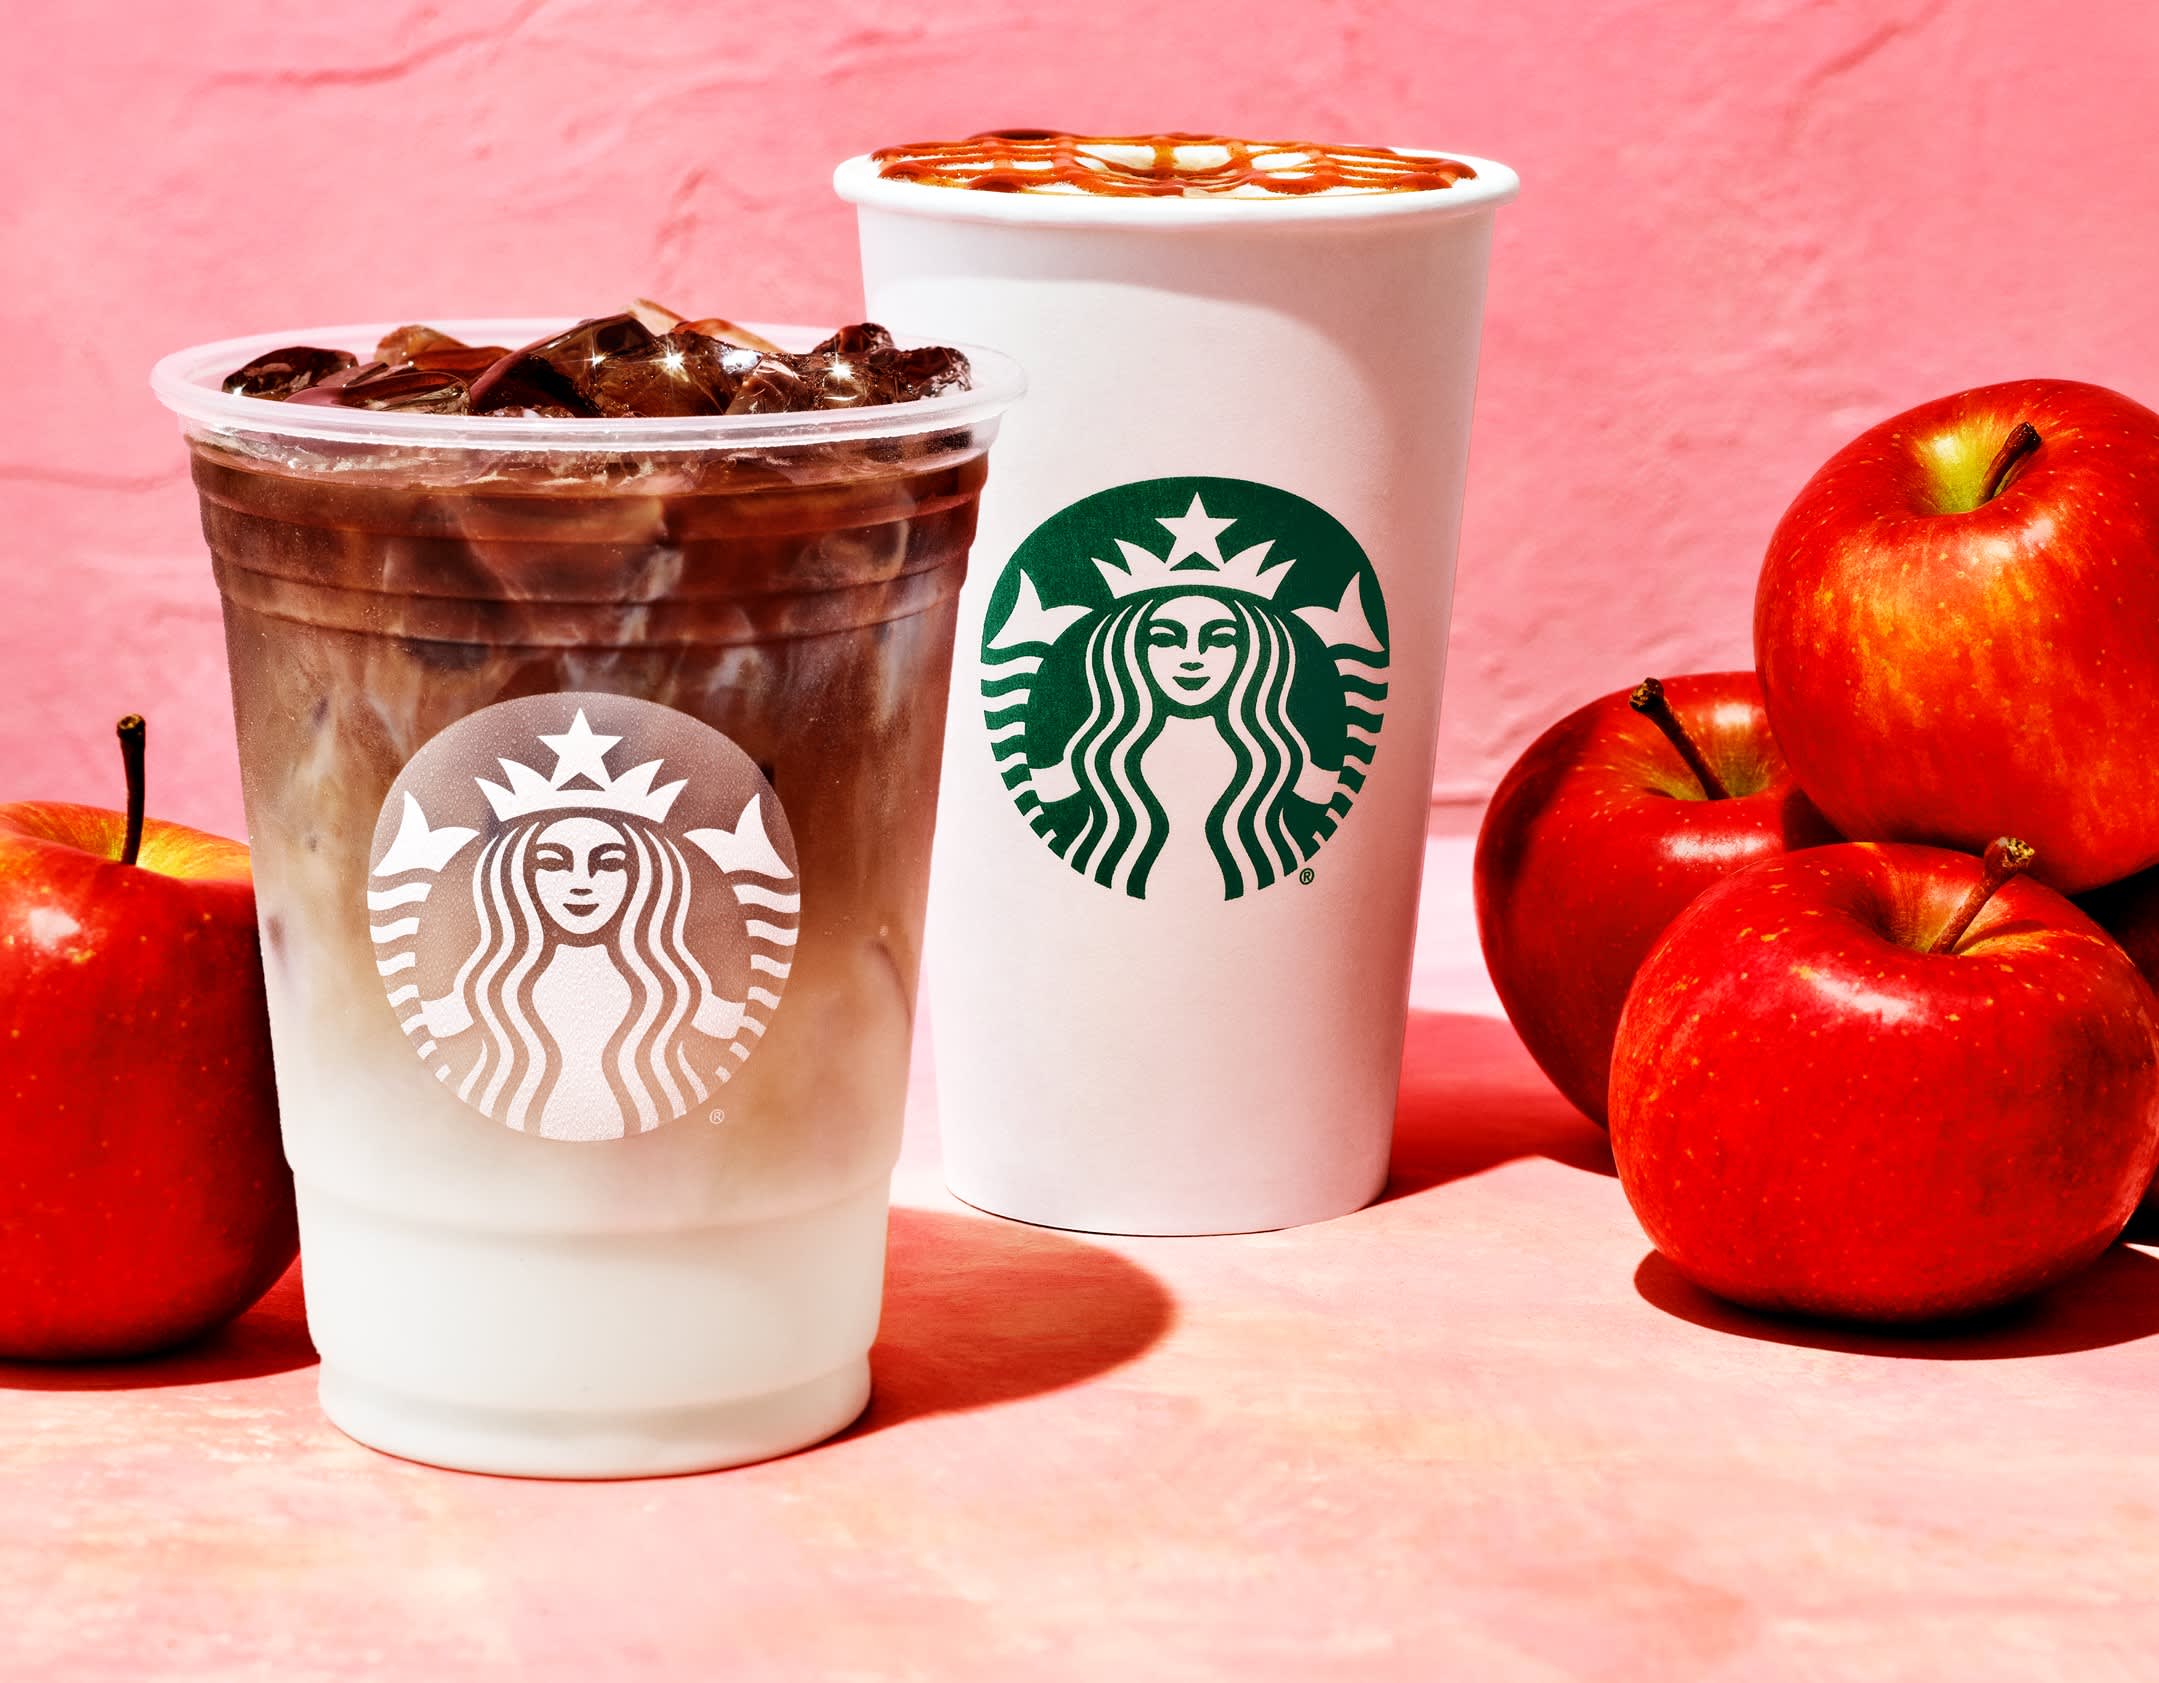 Starbucks’ new apple crisp macchiato joins pumpkin spice latte on the autumn menu